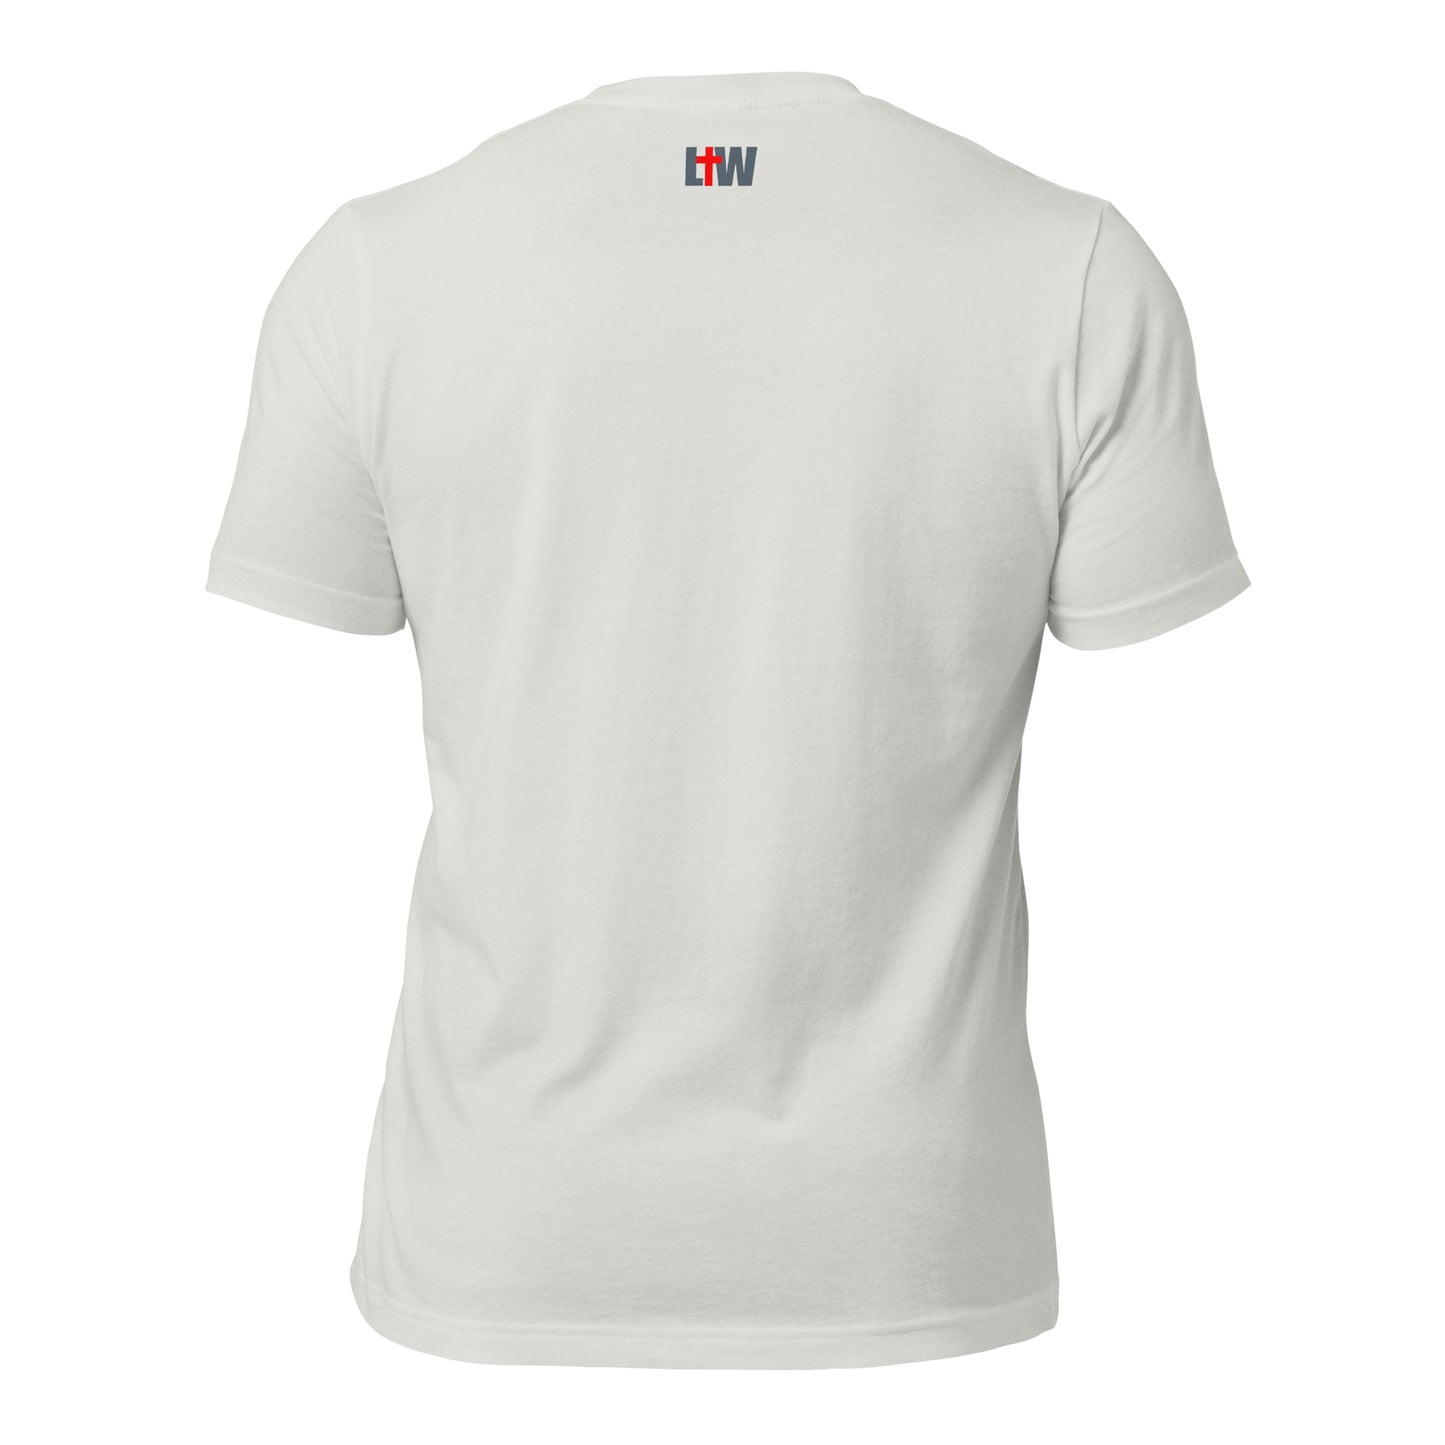 Truth Unisex T-Shirt